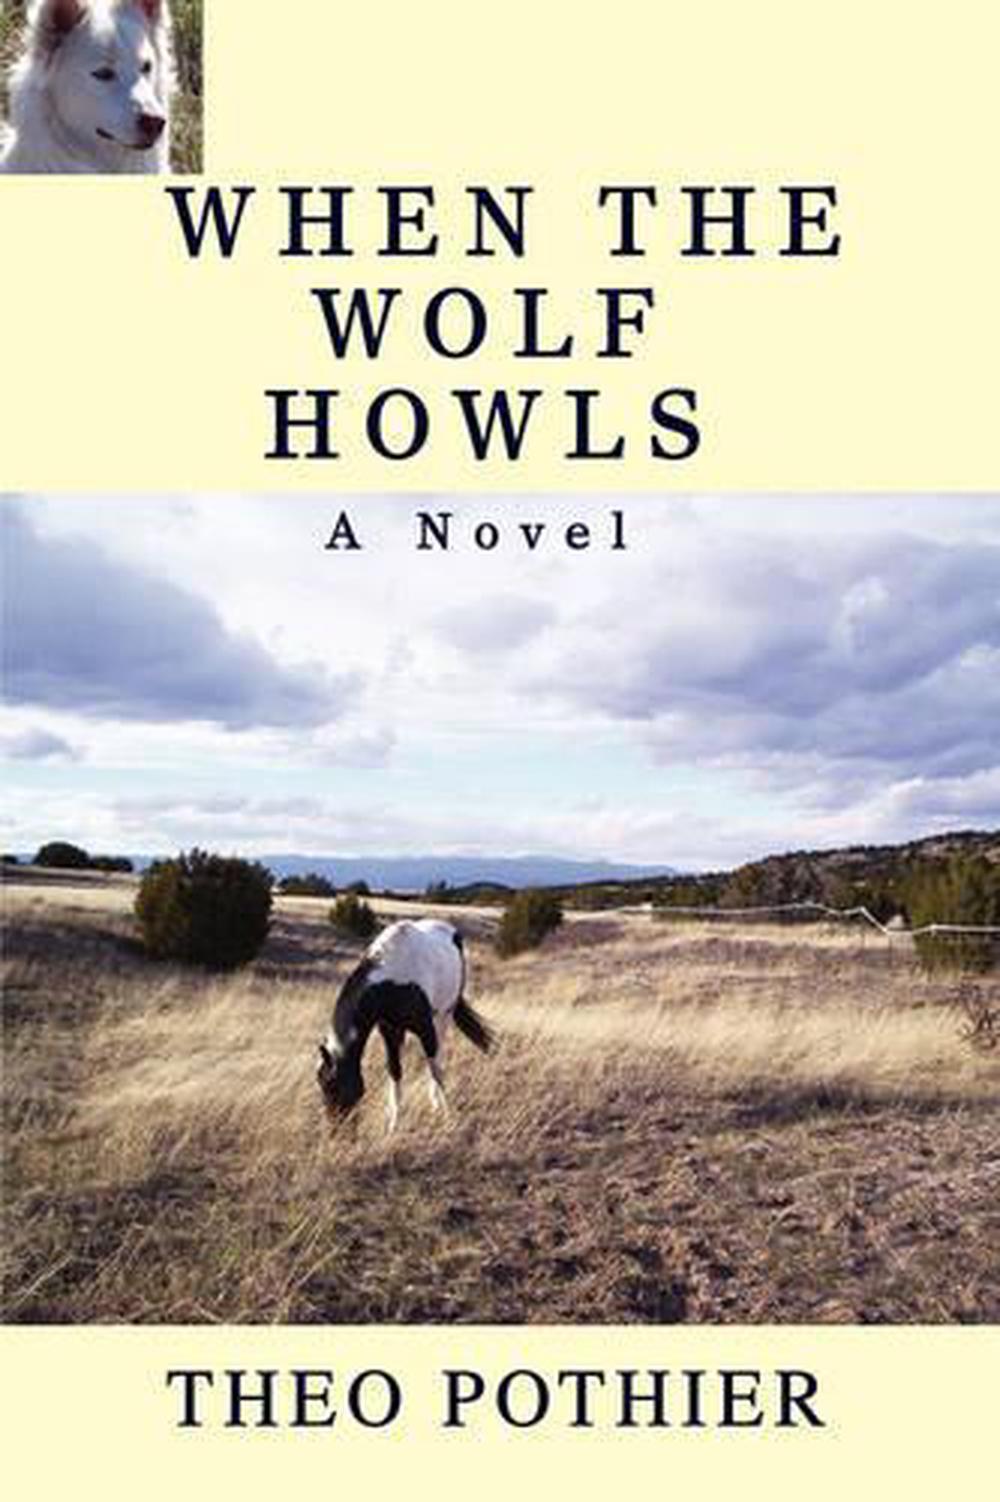 howls book